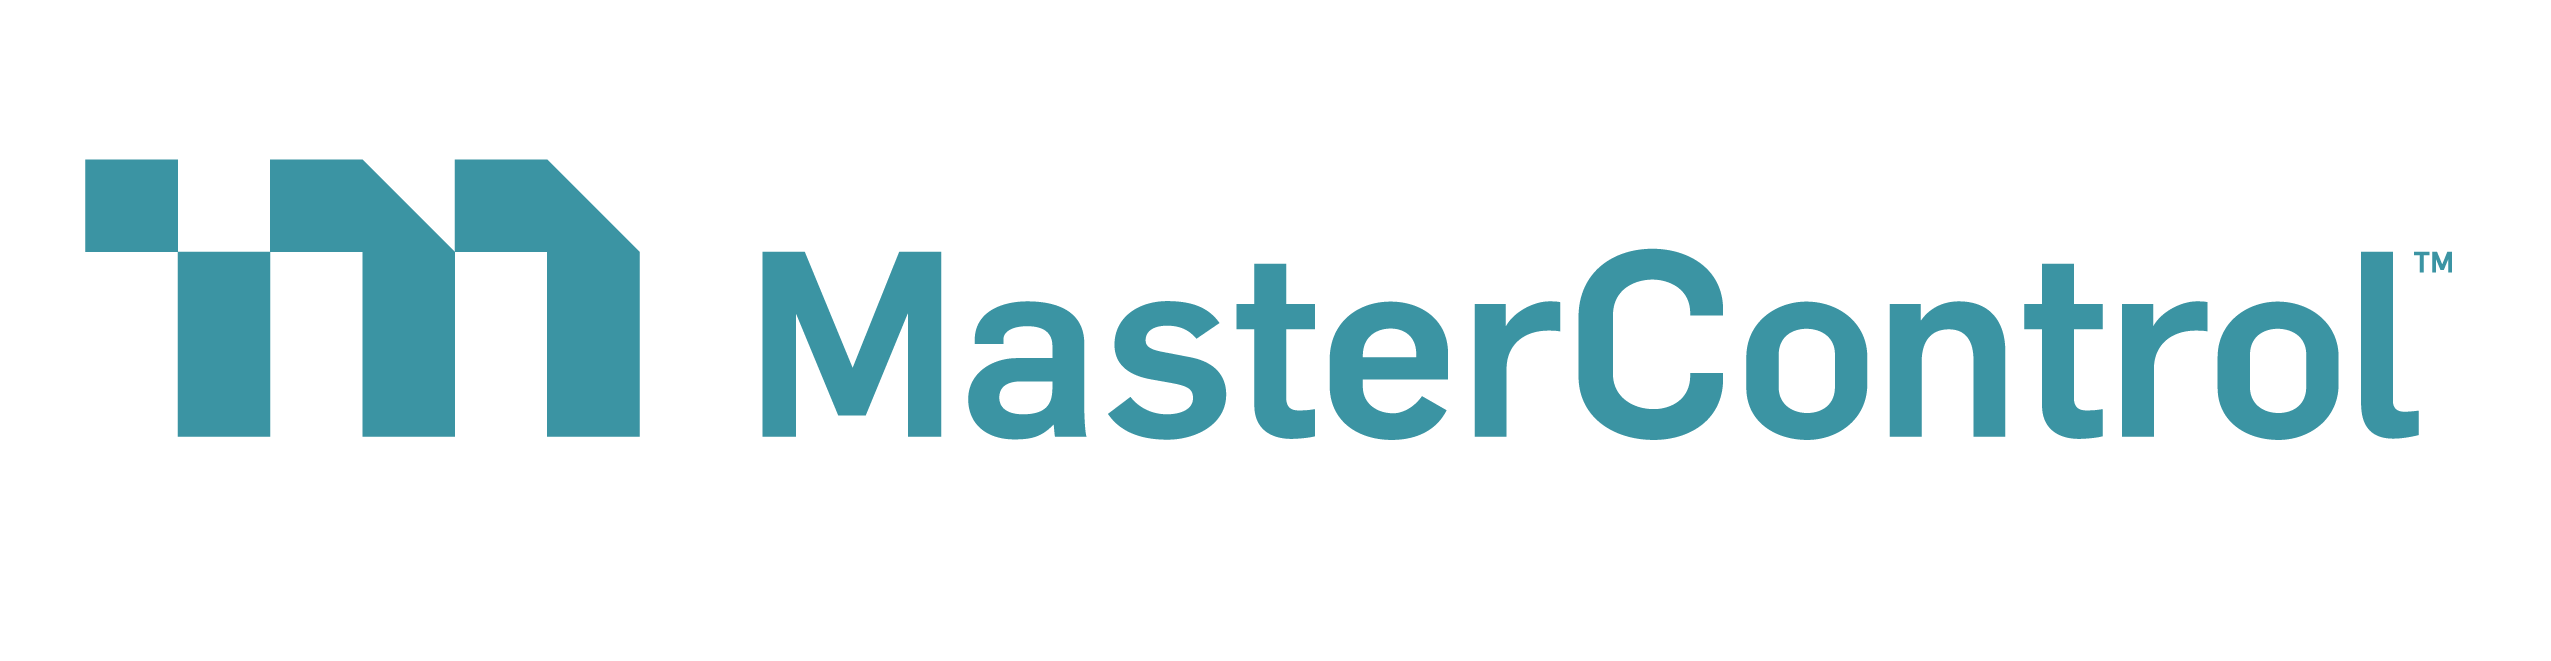 MasterControl is headquartered in Salt Lake City, Utah.